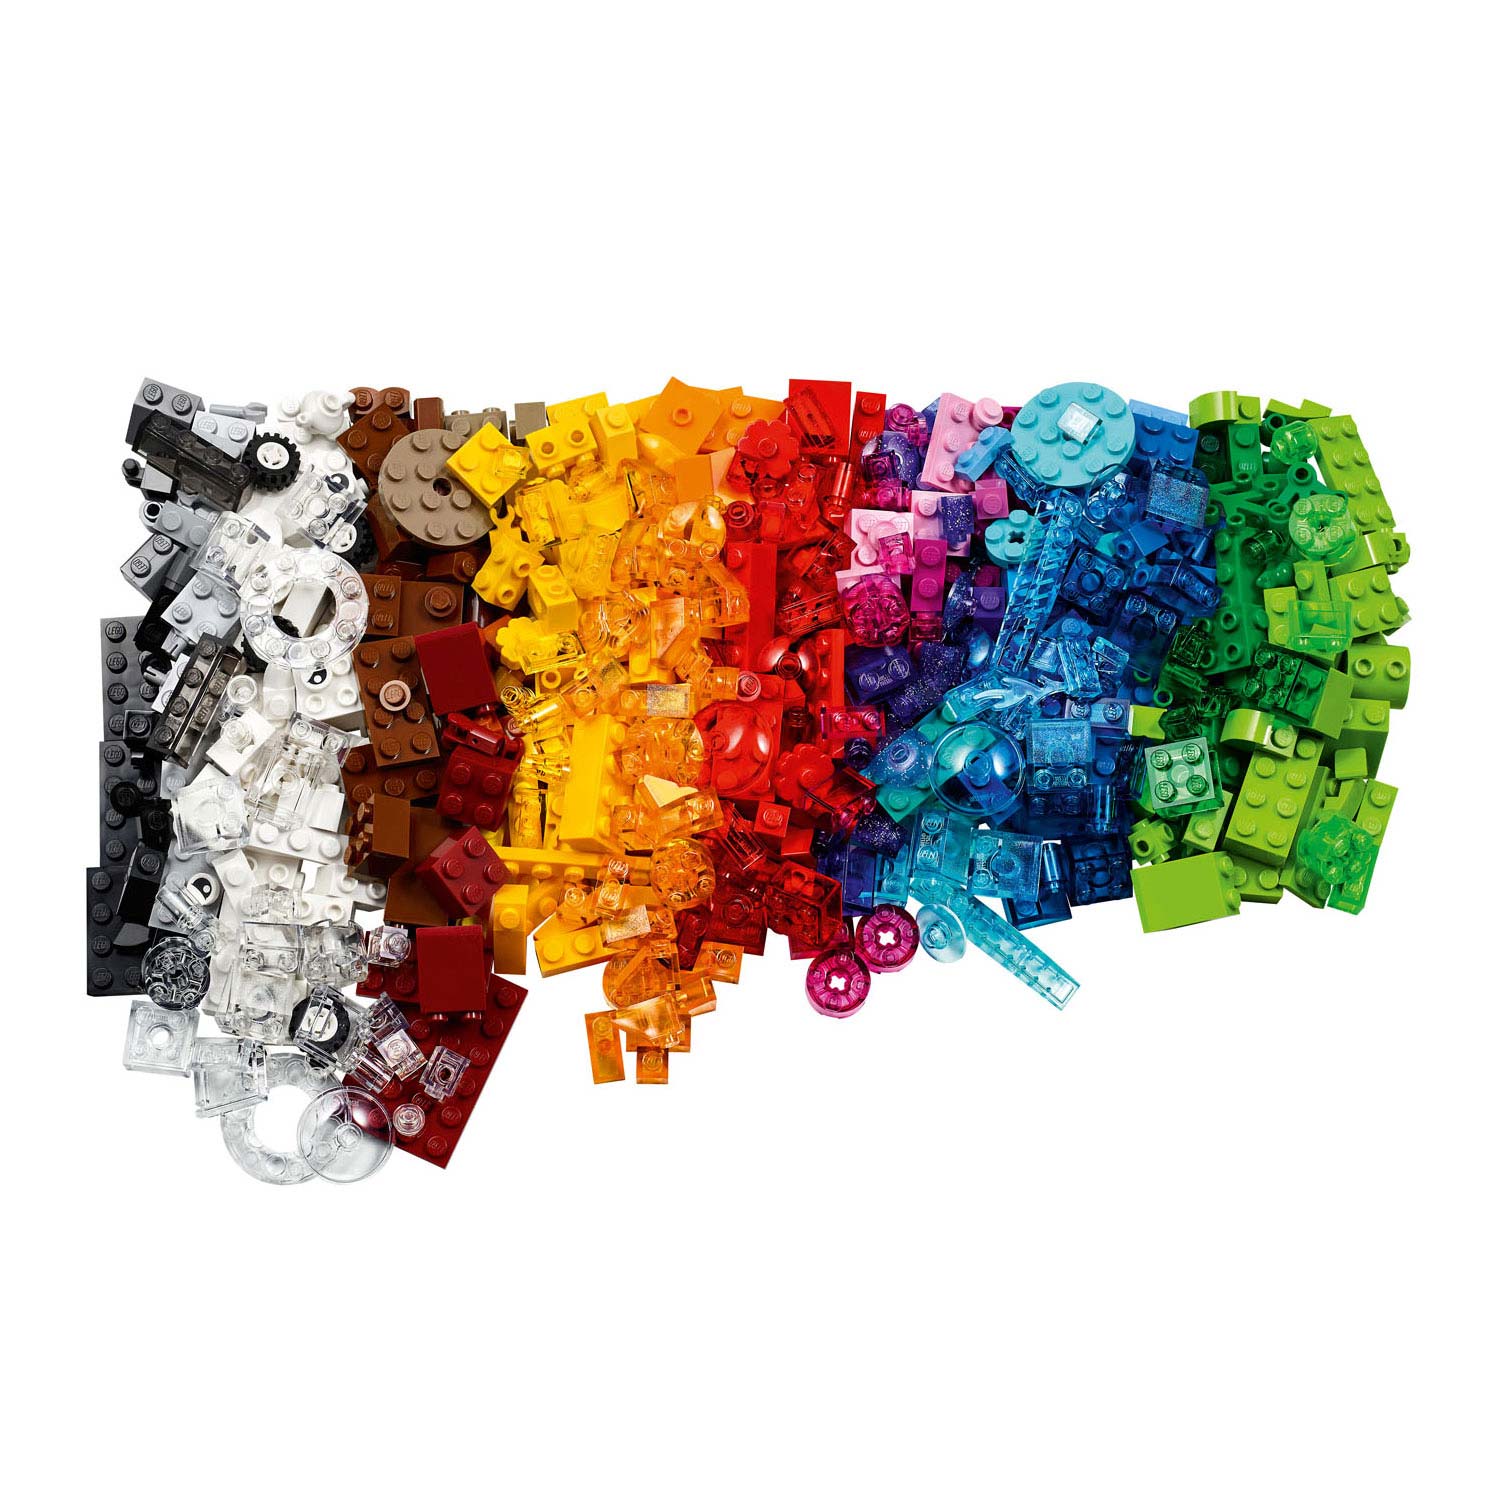 LEGO Classic 11013 Briques transparentes créatives